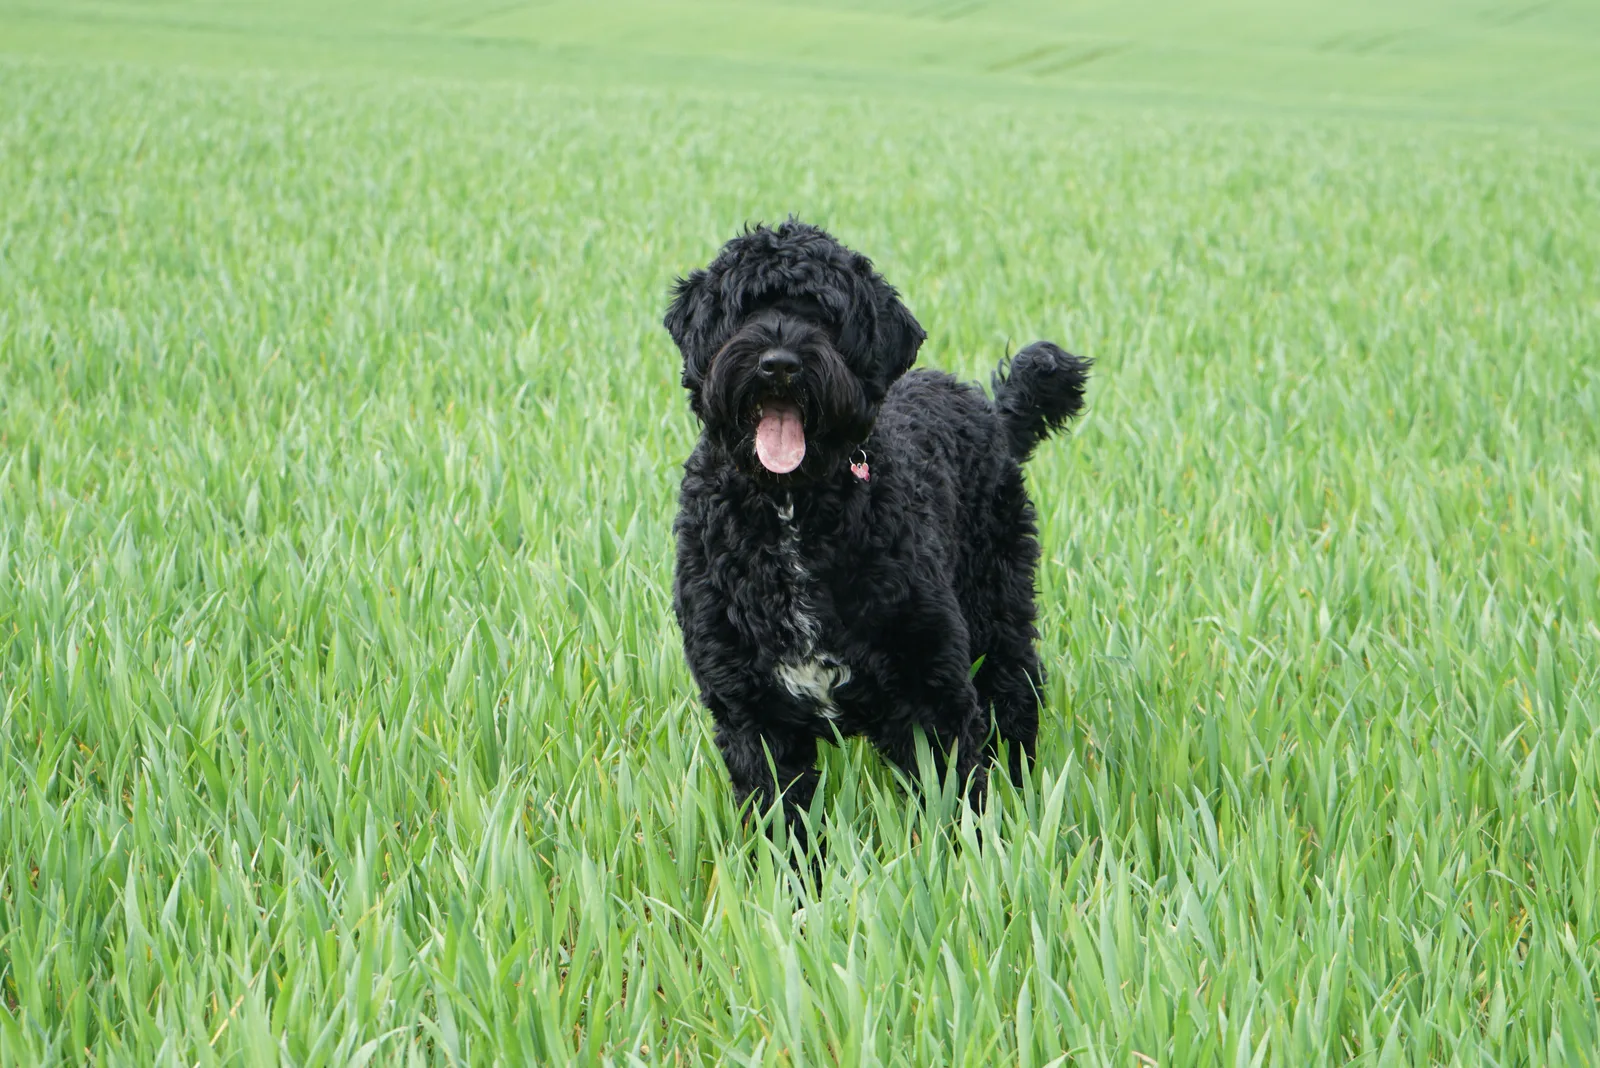 Portuguese water dog in a field